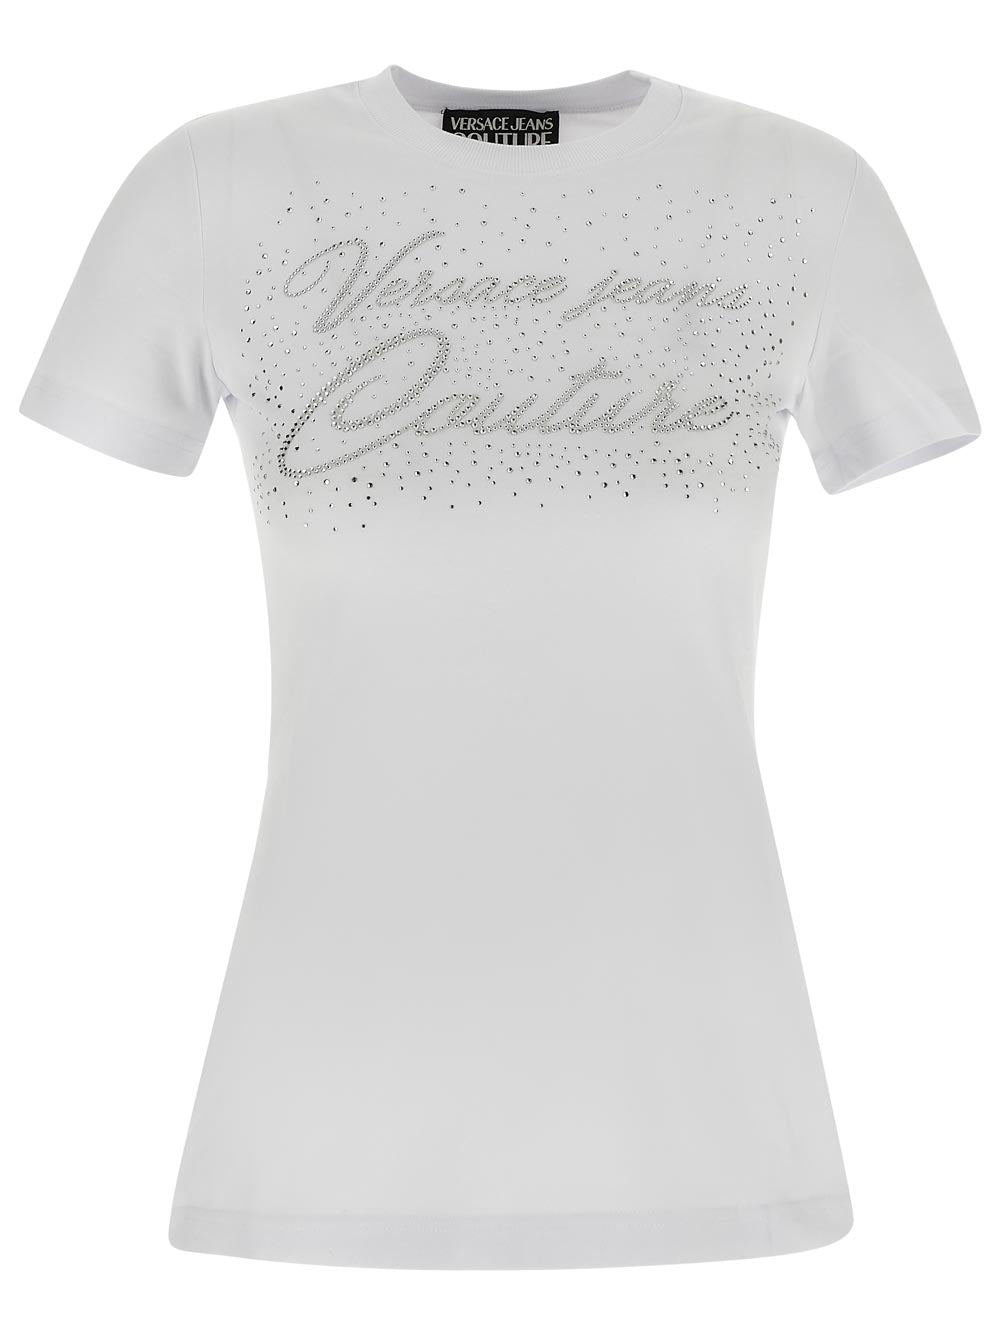 Versace Rhinestone-Detailed Cotton-Blend T-Shirt